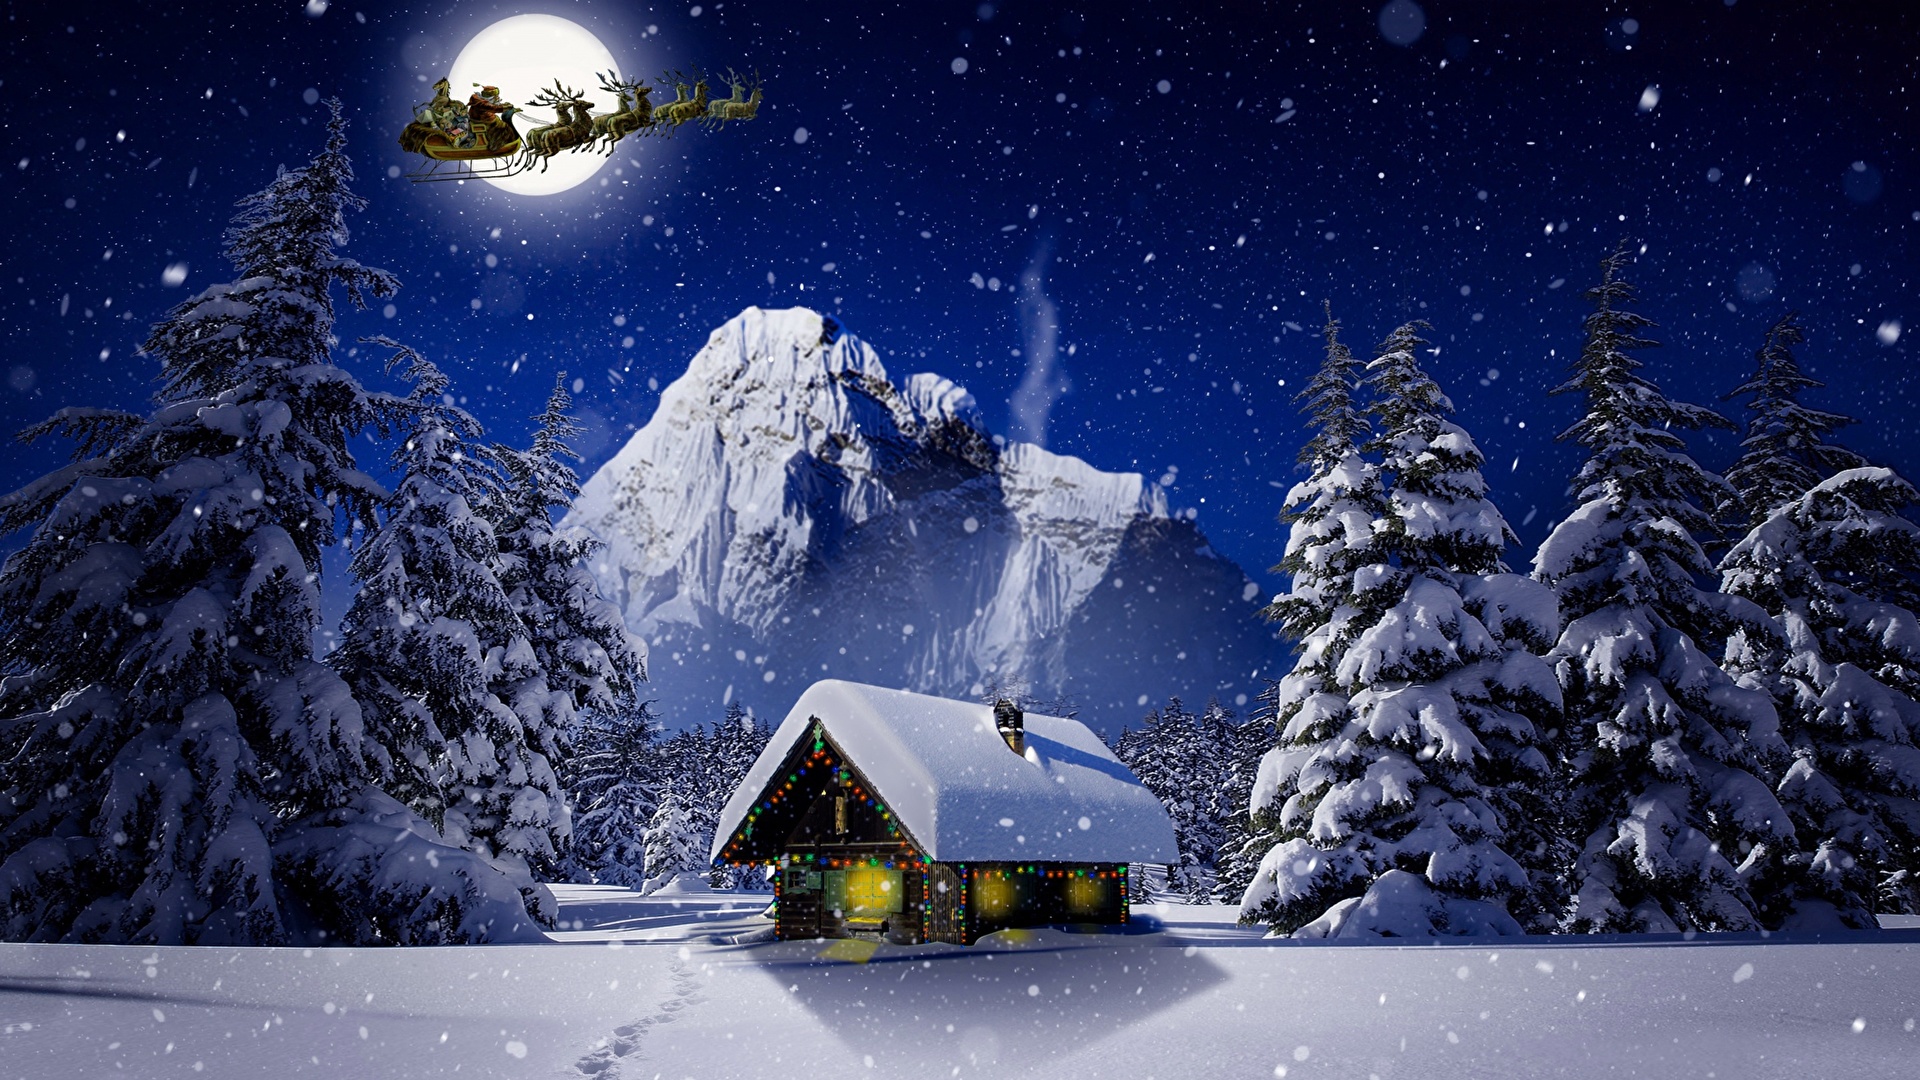 Images Deer Christmas sleigh Nature Winter Moon Snow night 1920x1080